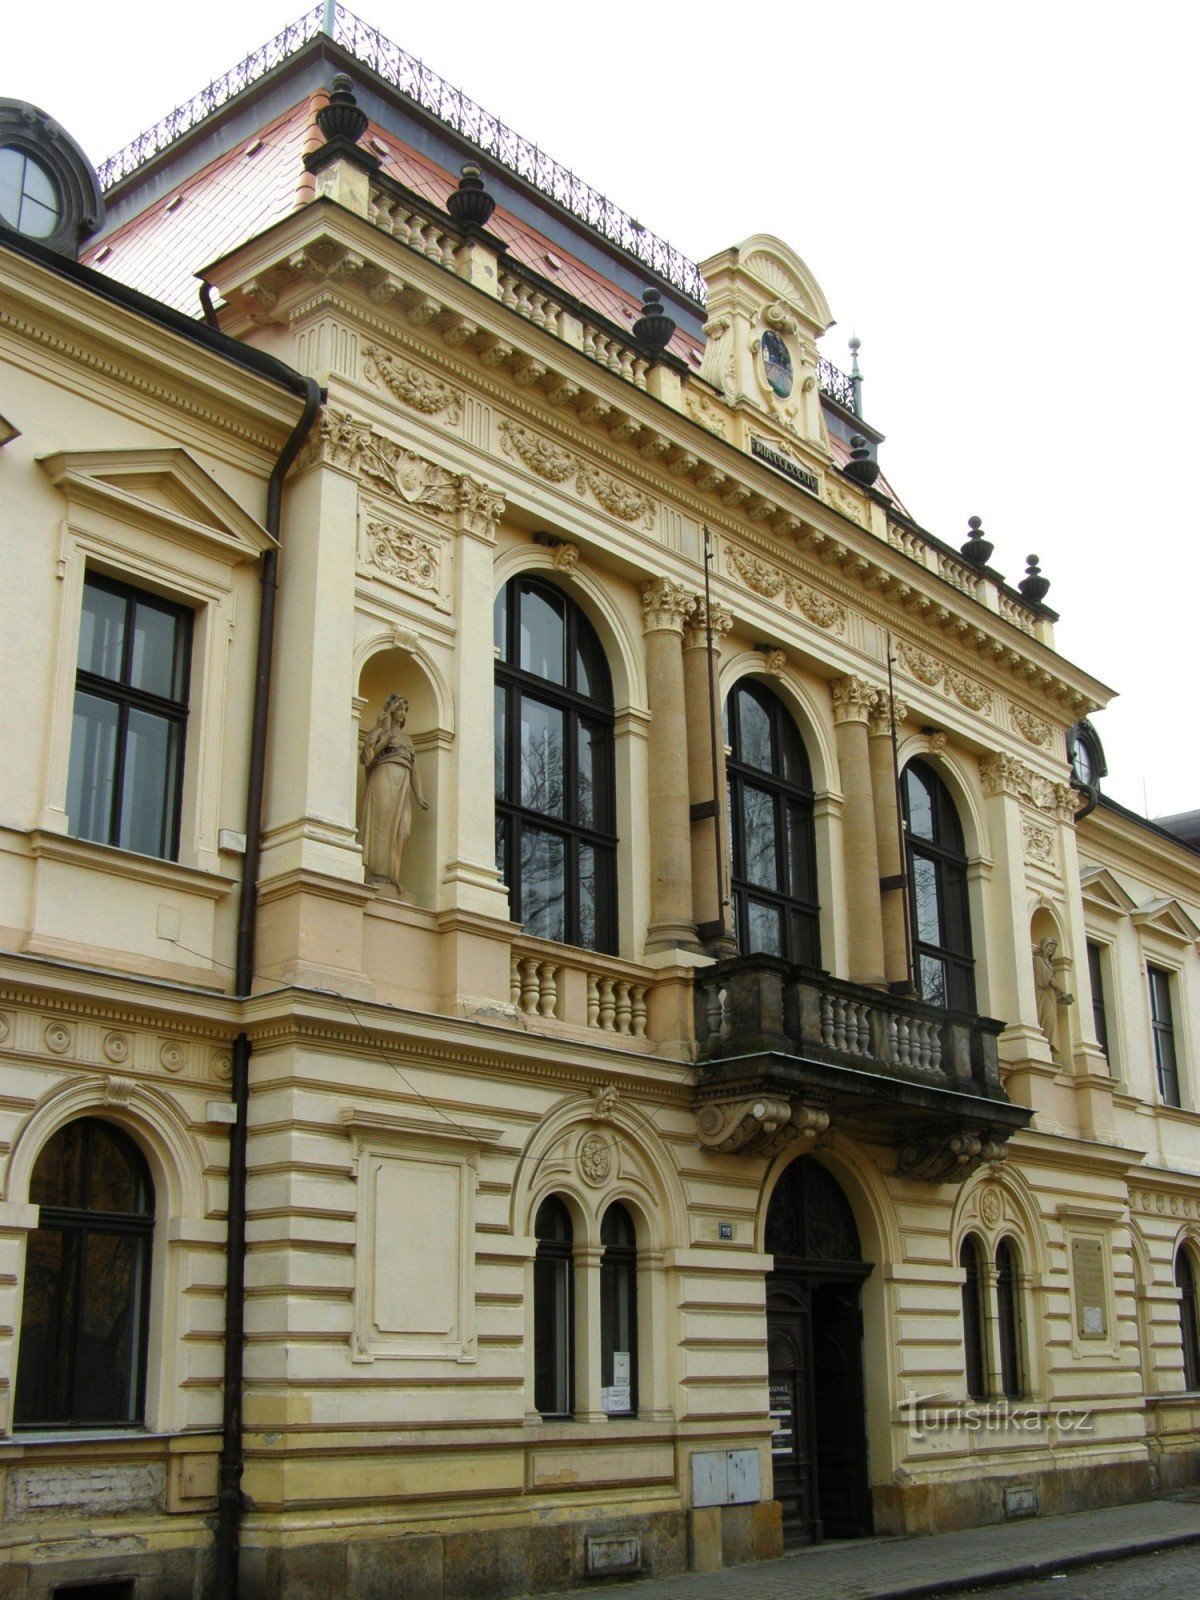 Josefov - Nytt rådhus, museum